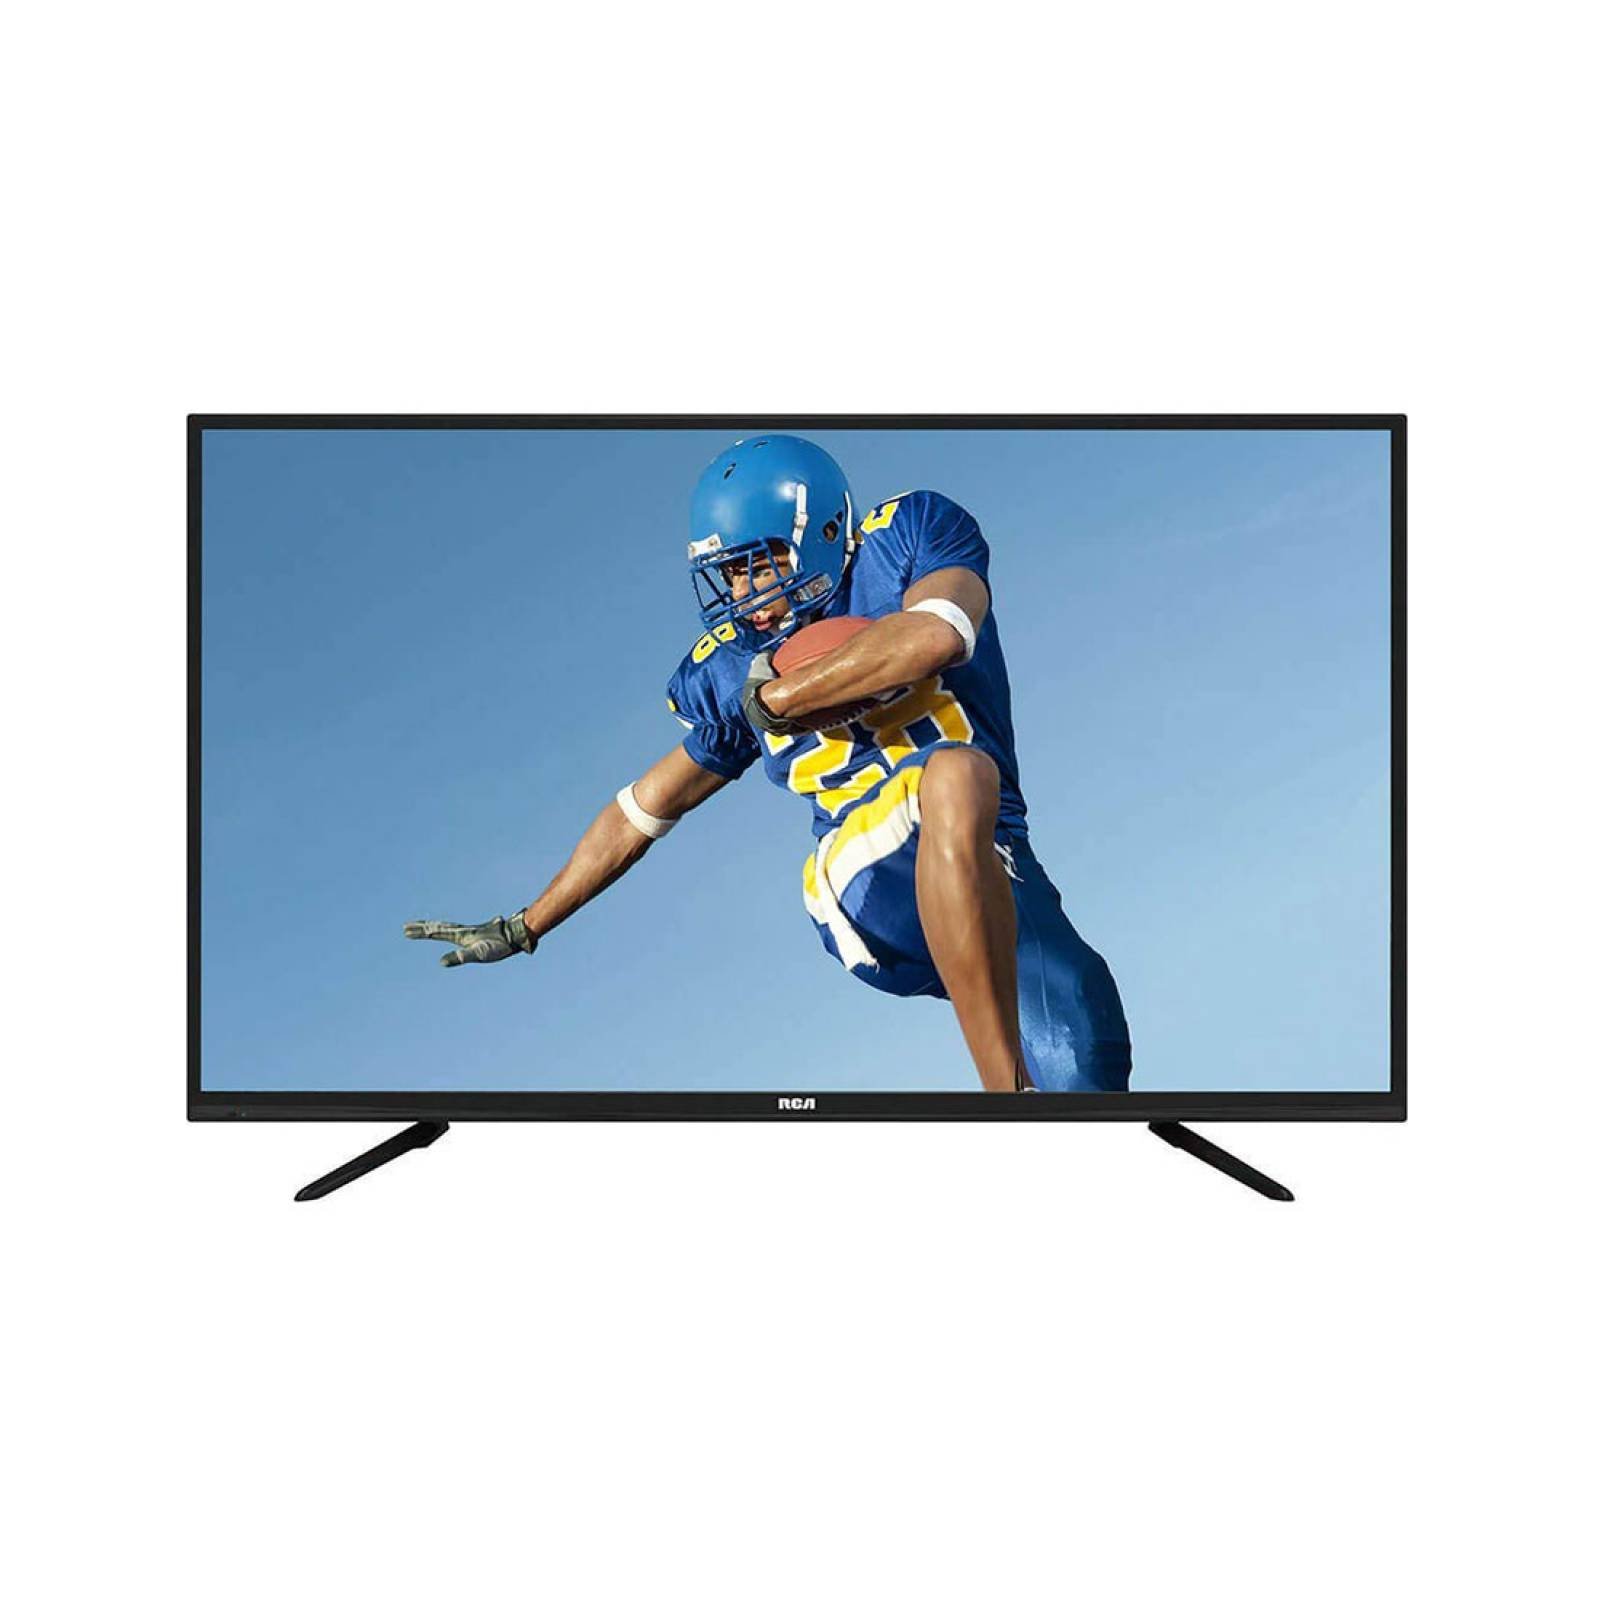 Pantalla TV LED 4K 55 pulg UHD Reacondicionada RCA